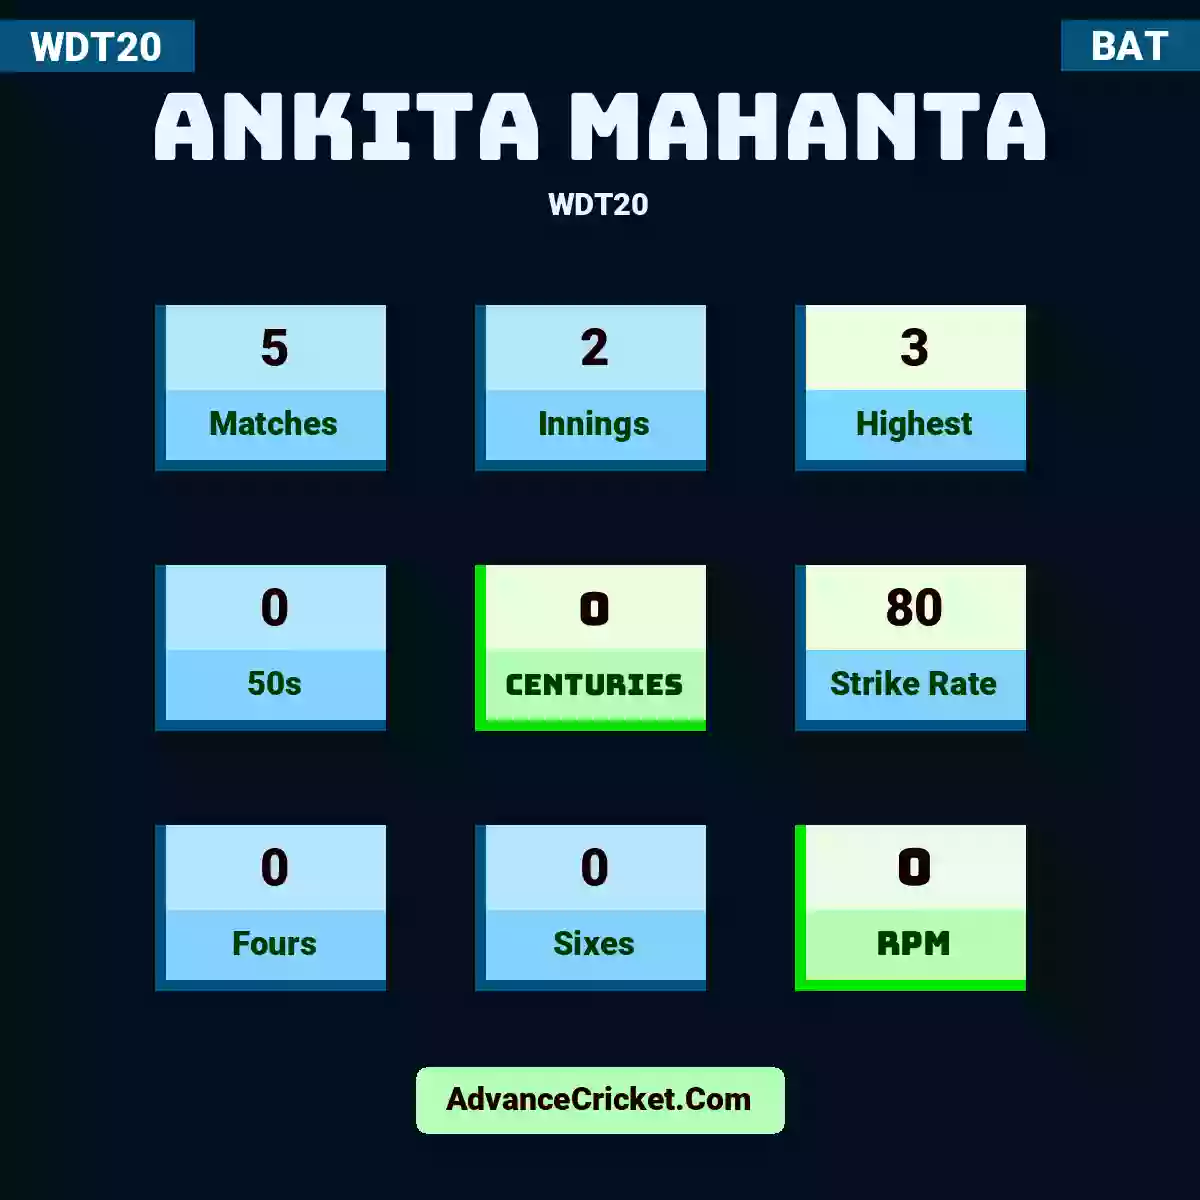 Ankita Mahanta WDT20 , Ankita Mahanta played 5 matches, scored 3 runs as highest, 0 half-centuries, and 0 centuries, with a strike rate of 80. A.Mahanta hit 0 fours and 0 sixes, with an RPM of 0.